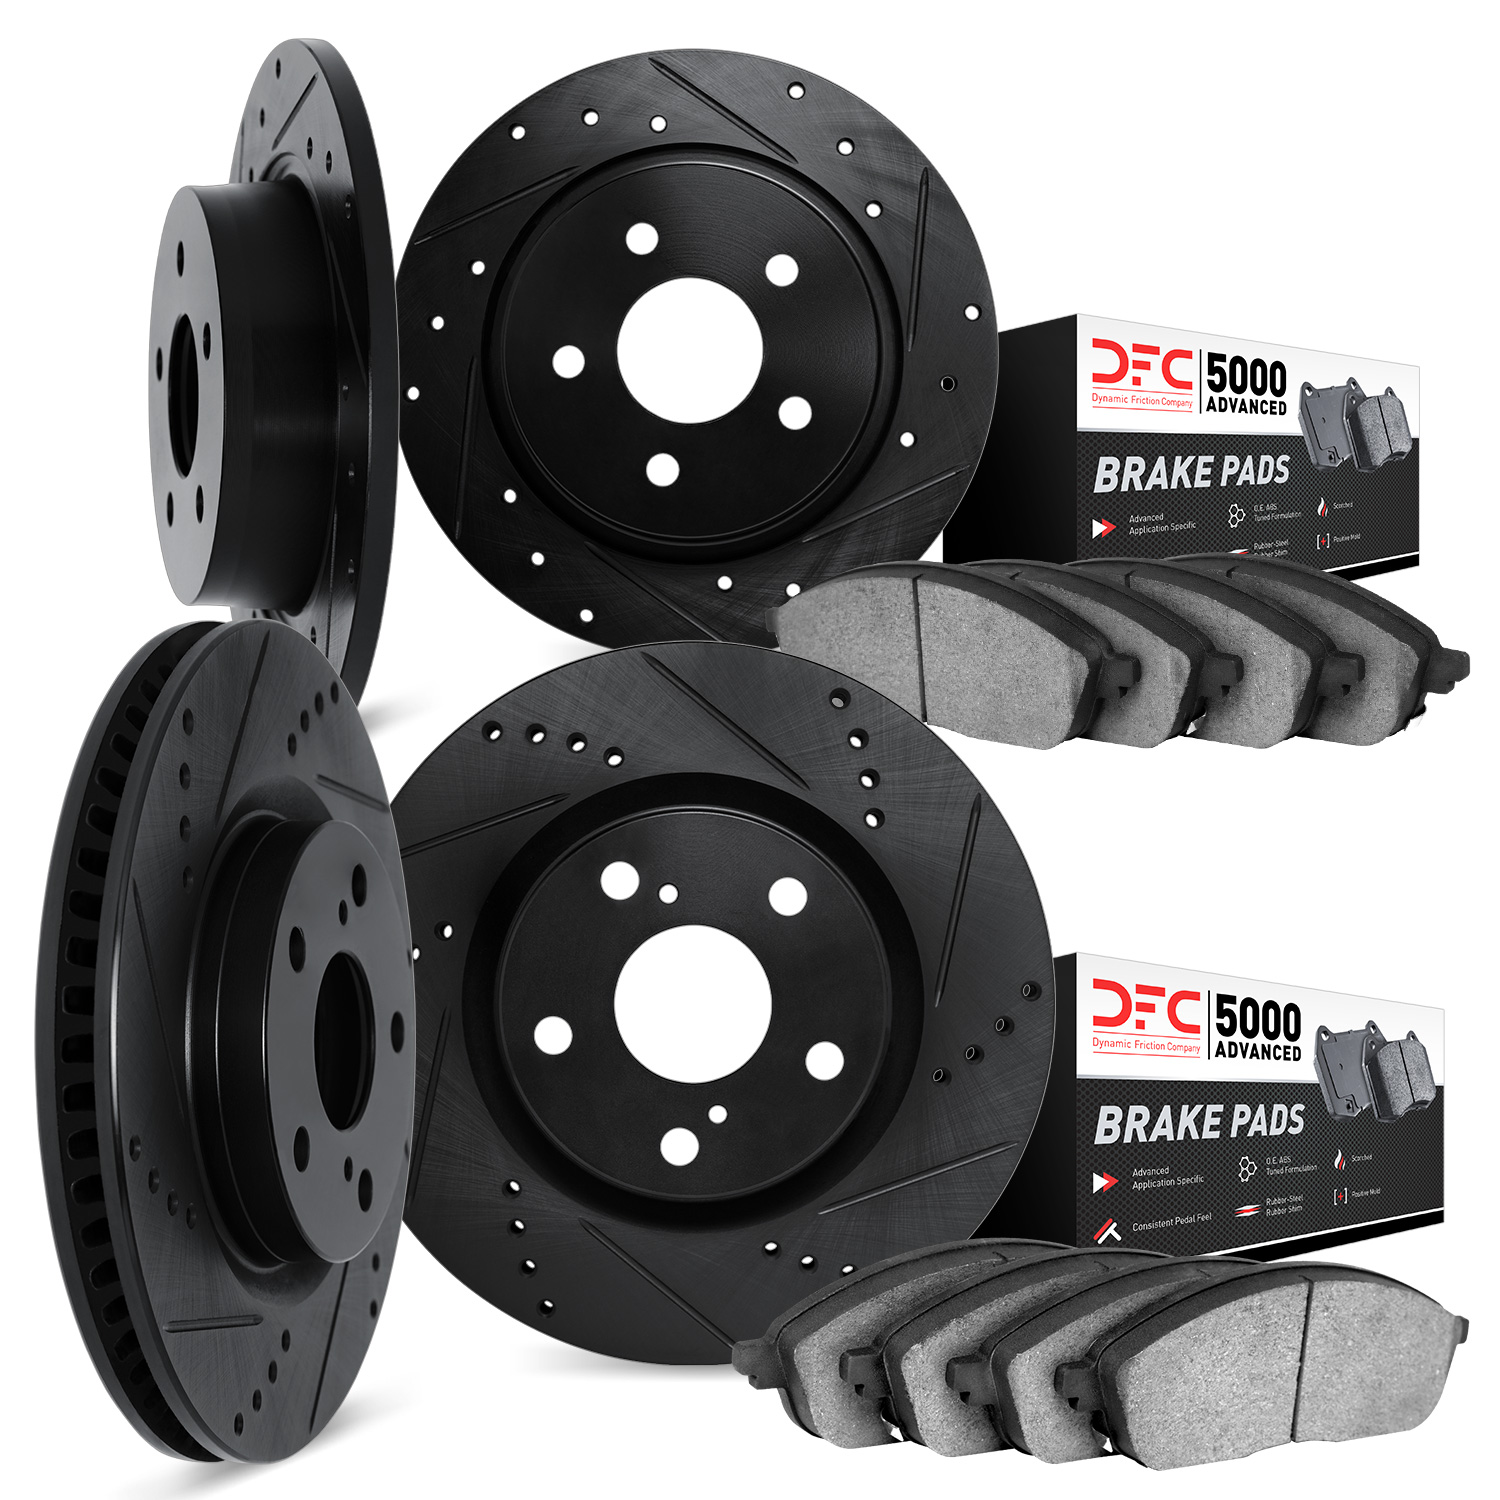 8504-39033 Drilled/Slotted Brake Rotors w/5000 Advanced Brake Pads Kit [Black], 2013-2016 Mopar, Position: Front and Rear